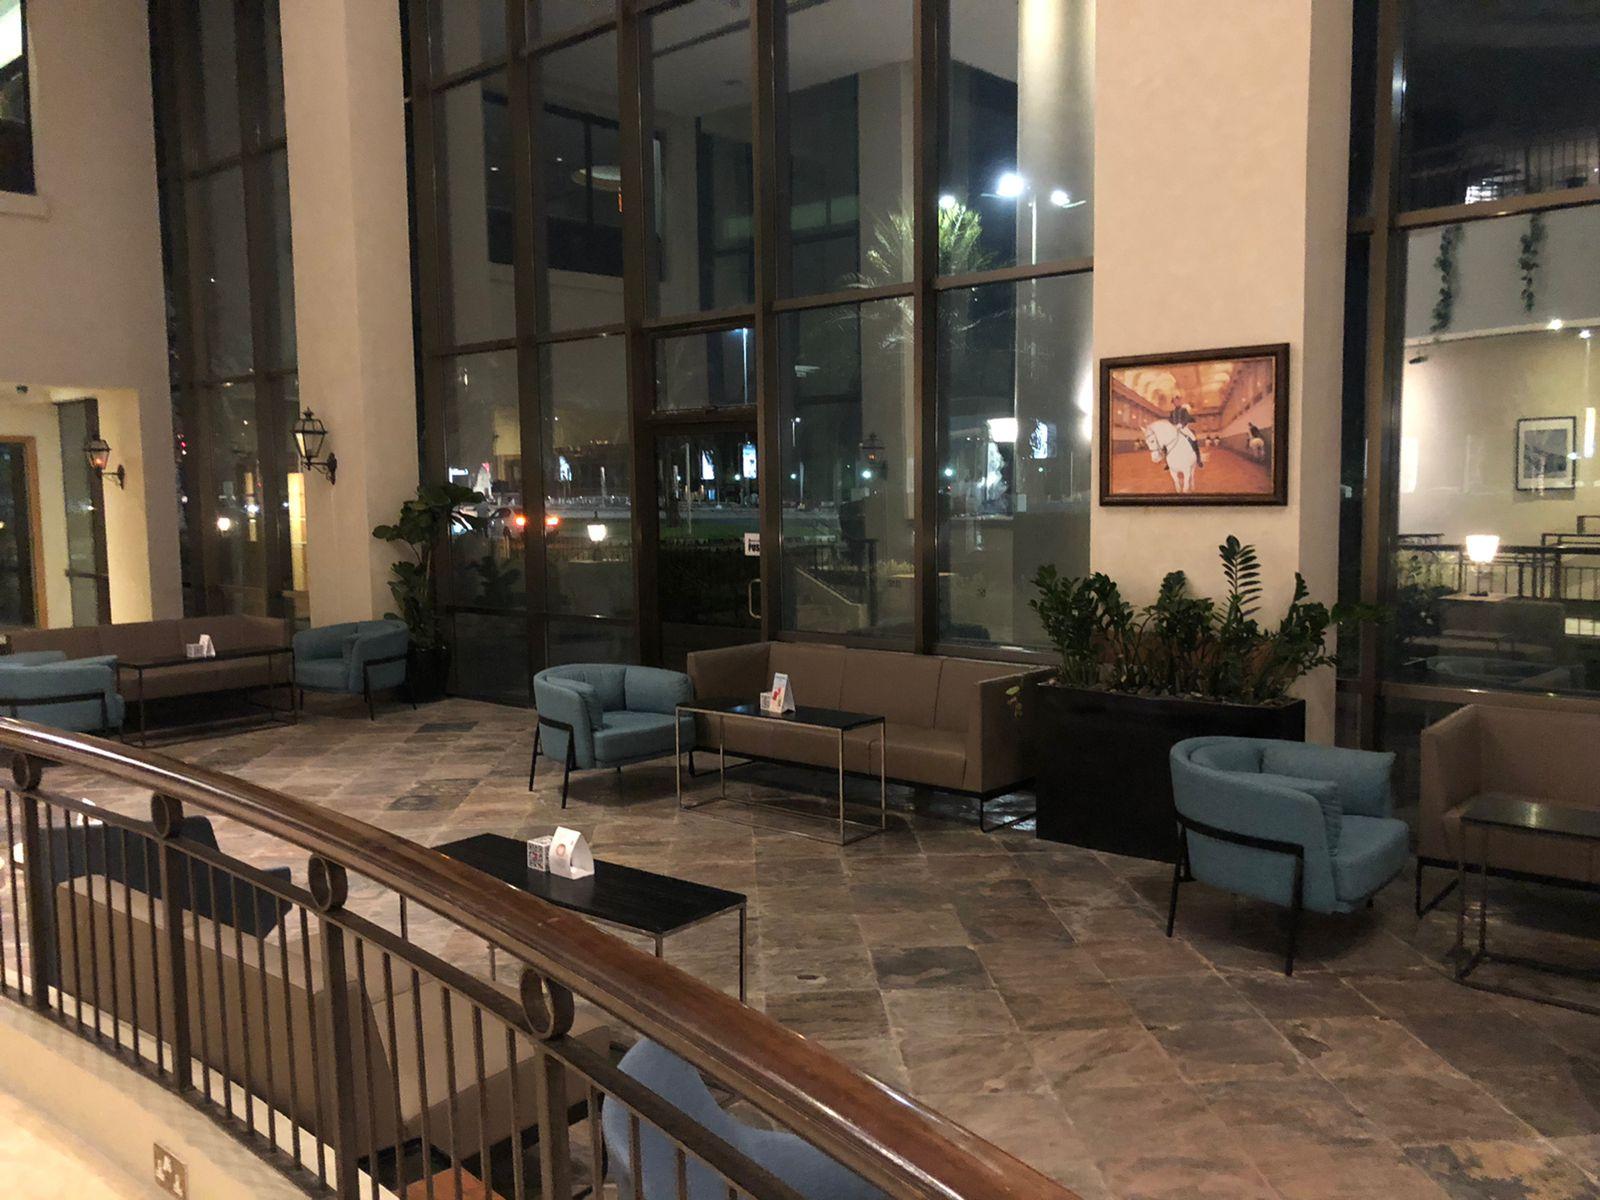 Radisson Blu Hotel & Resort, Abu Dhabi Corniche Club Lounge Tables